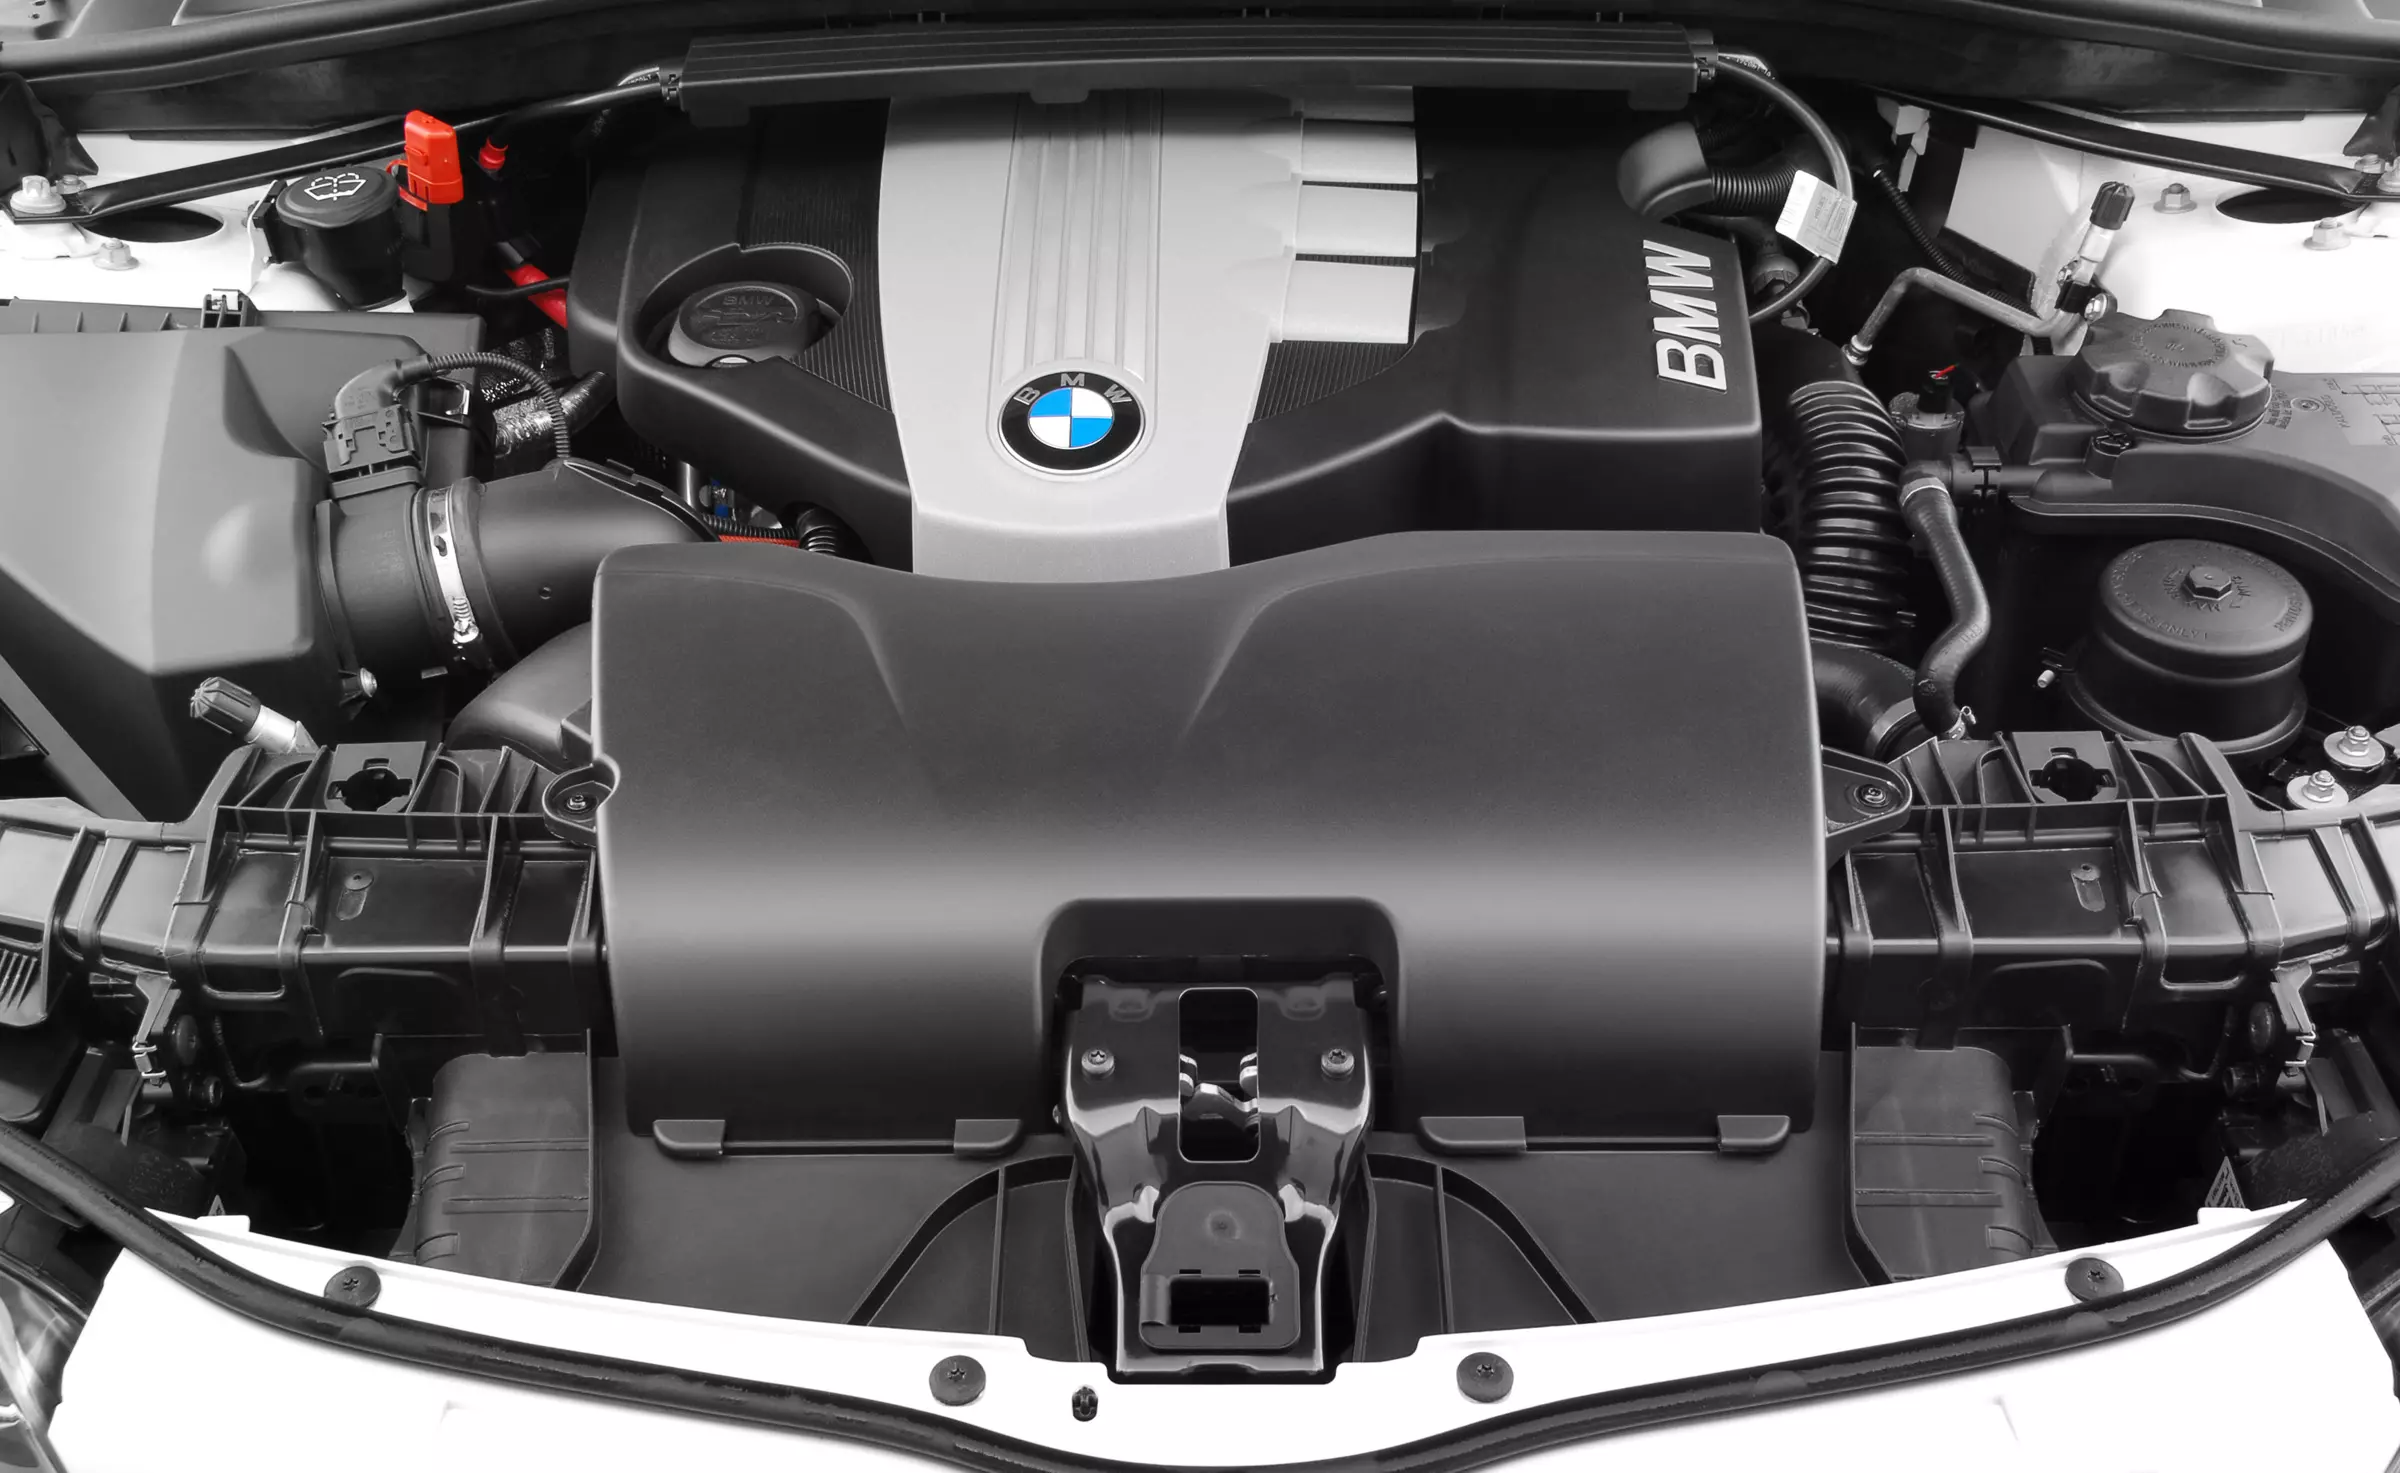 BMW 1-Series common problems (2004-2013)